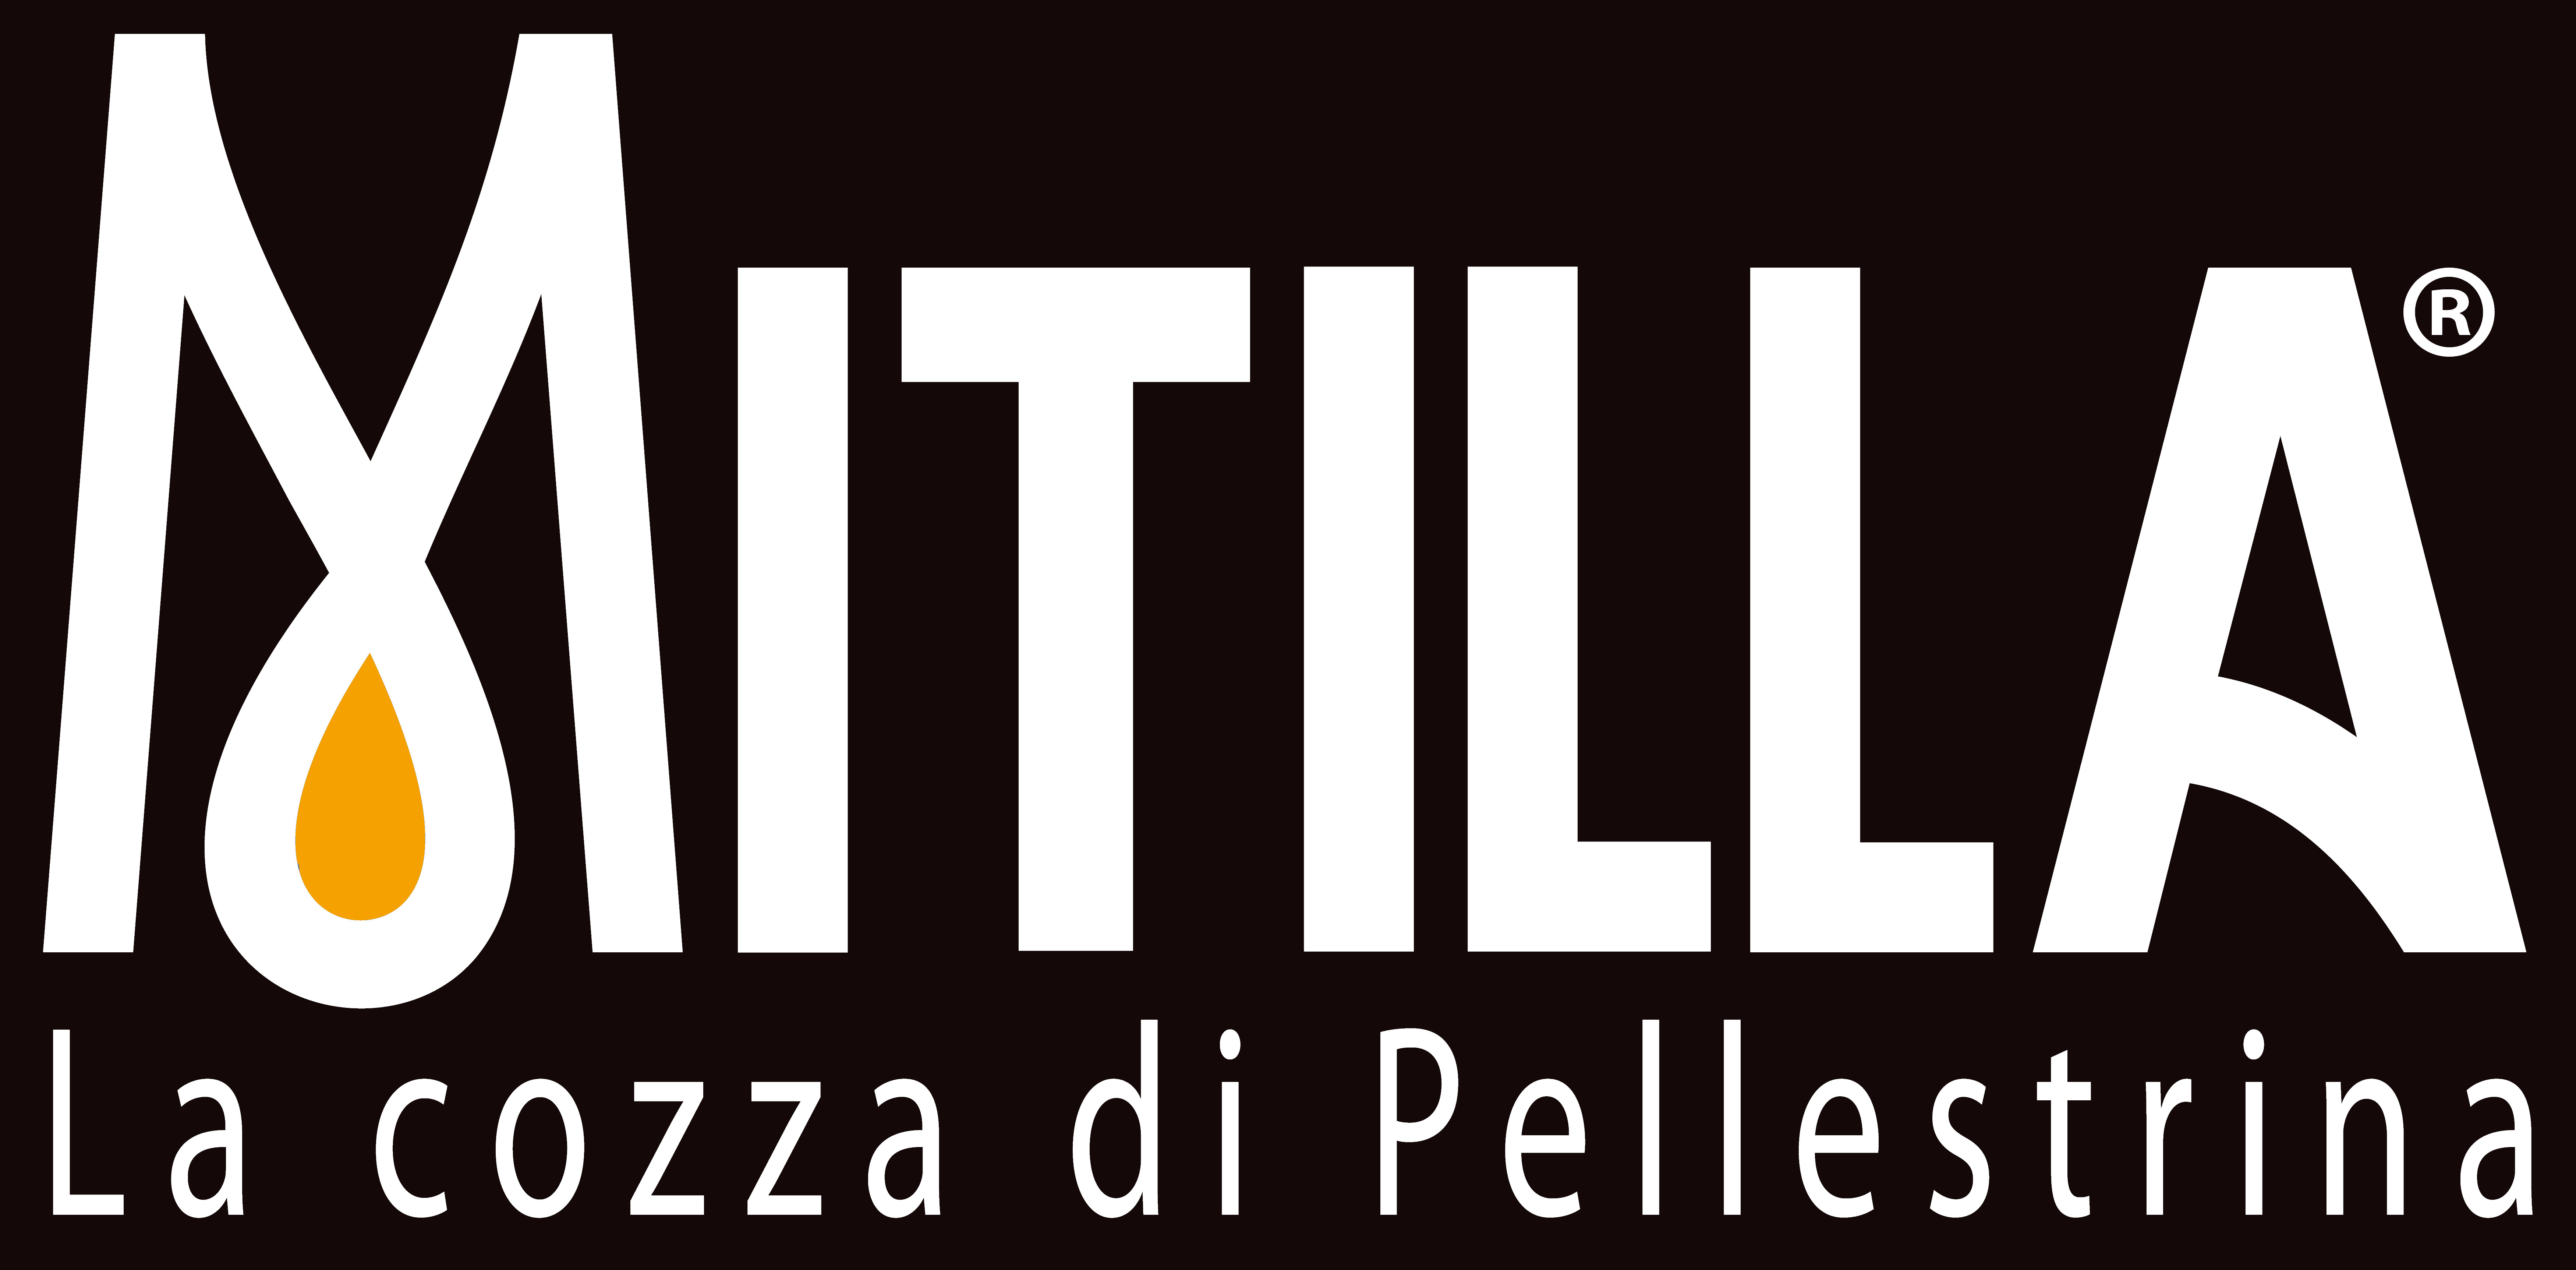 Logo_Mitilla_R